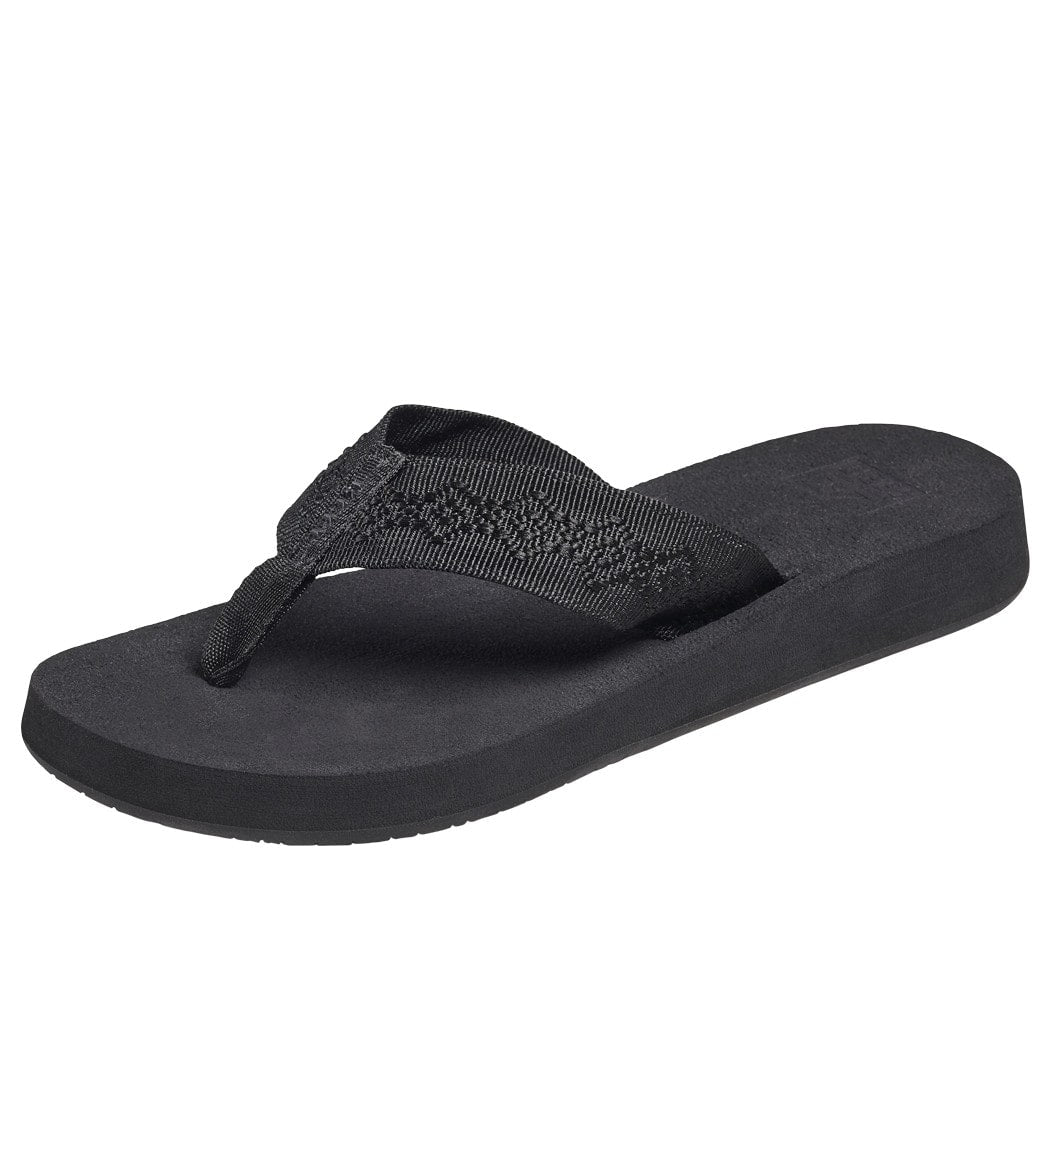 Reef Women's Sandy Sandals - Black/Black 6 Polyester - Swimoutlet.com